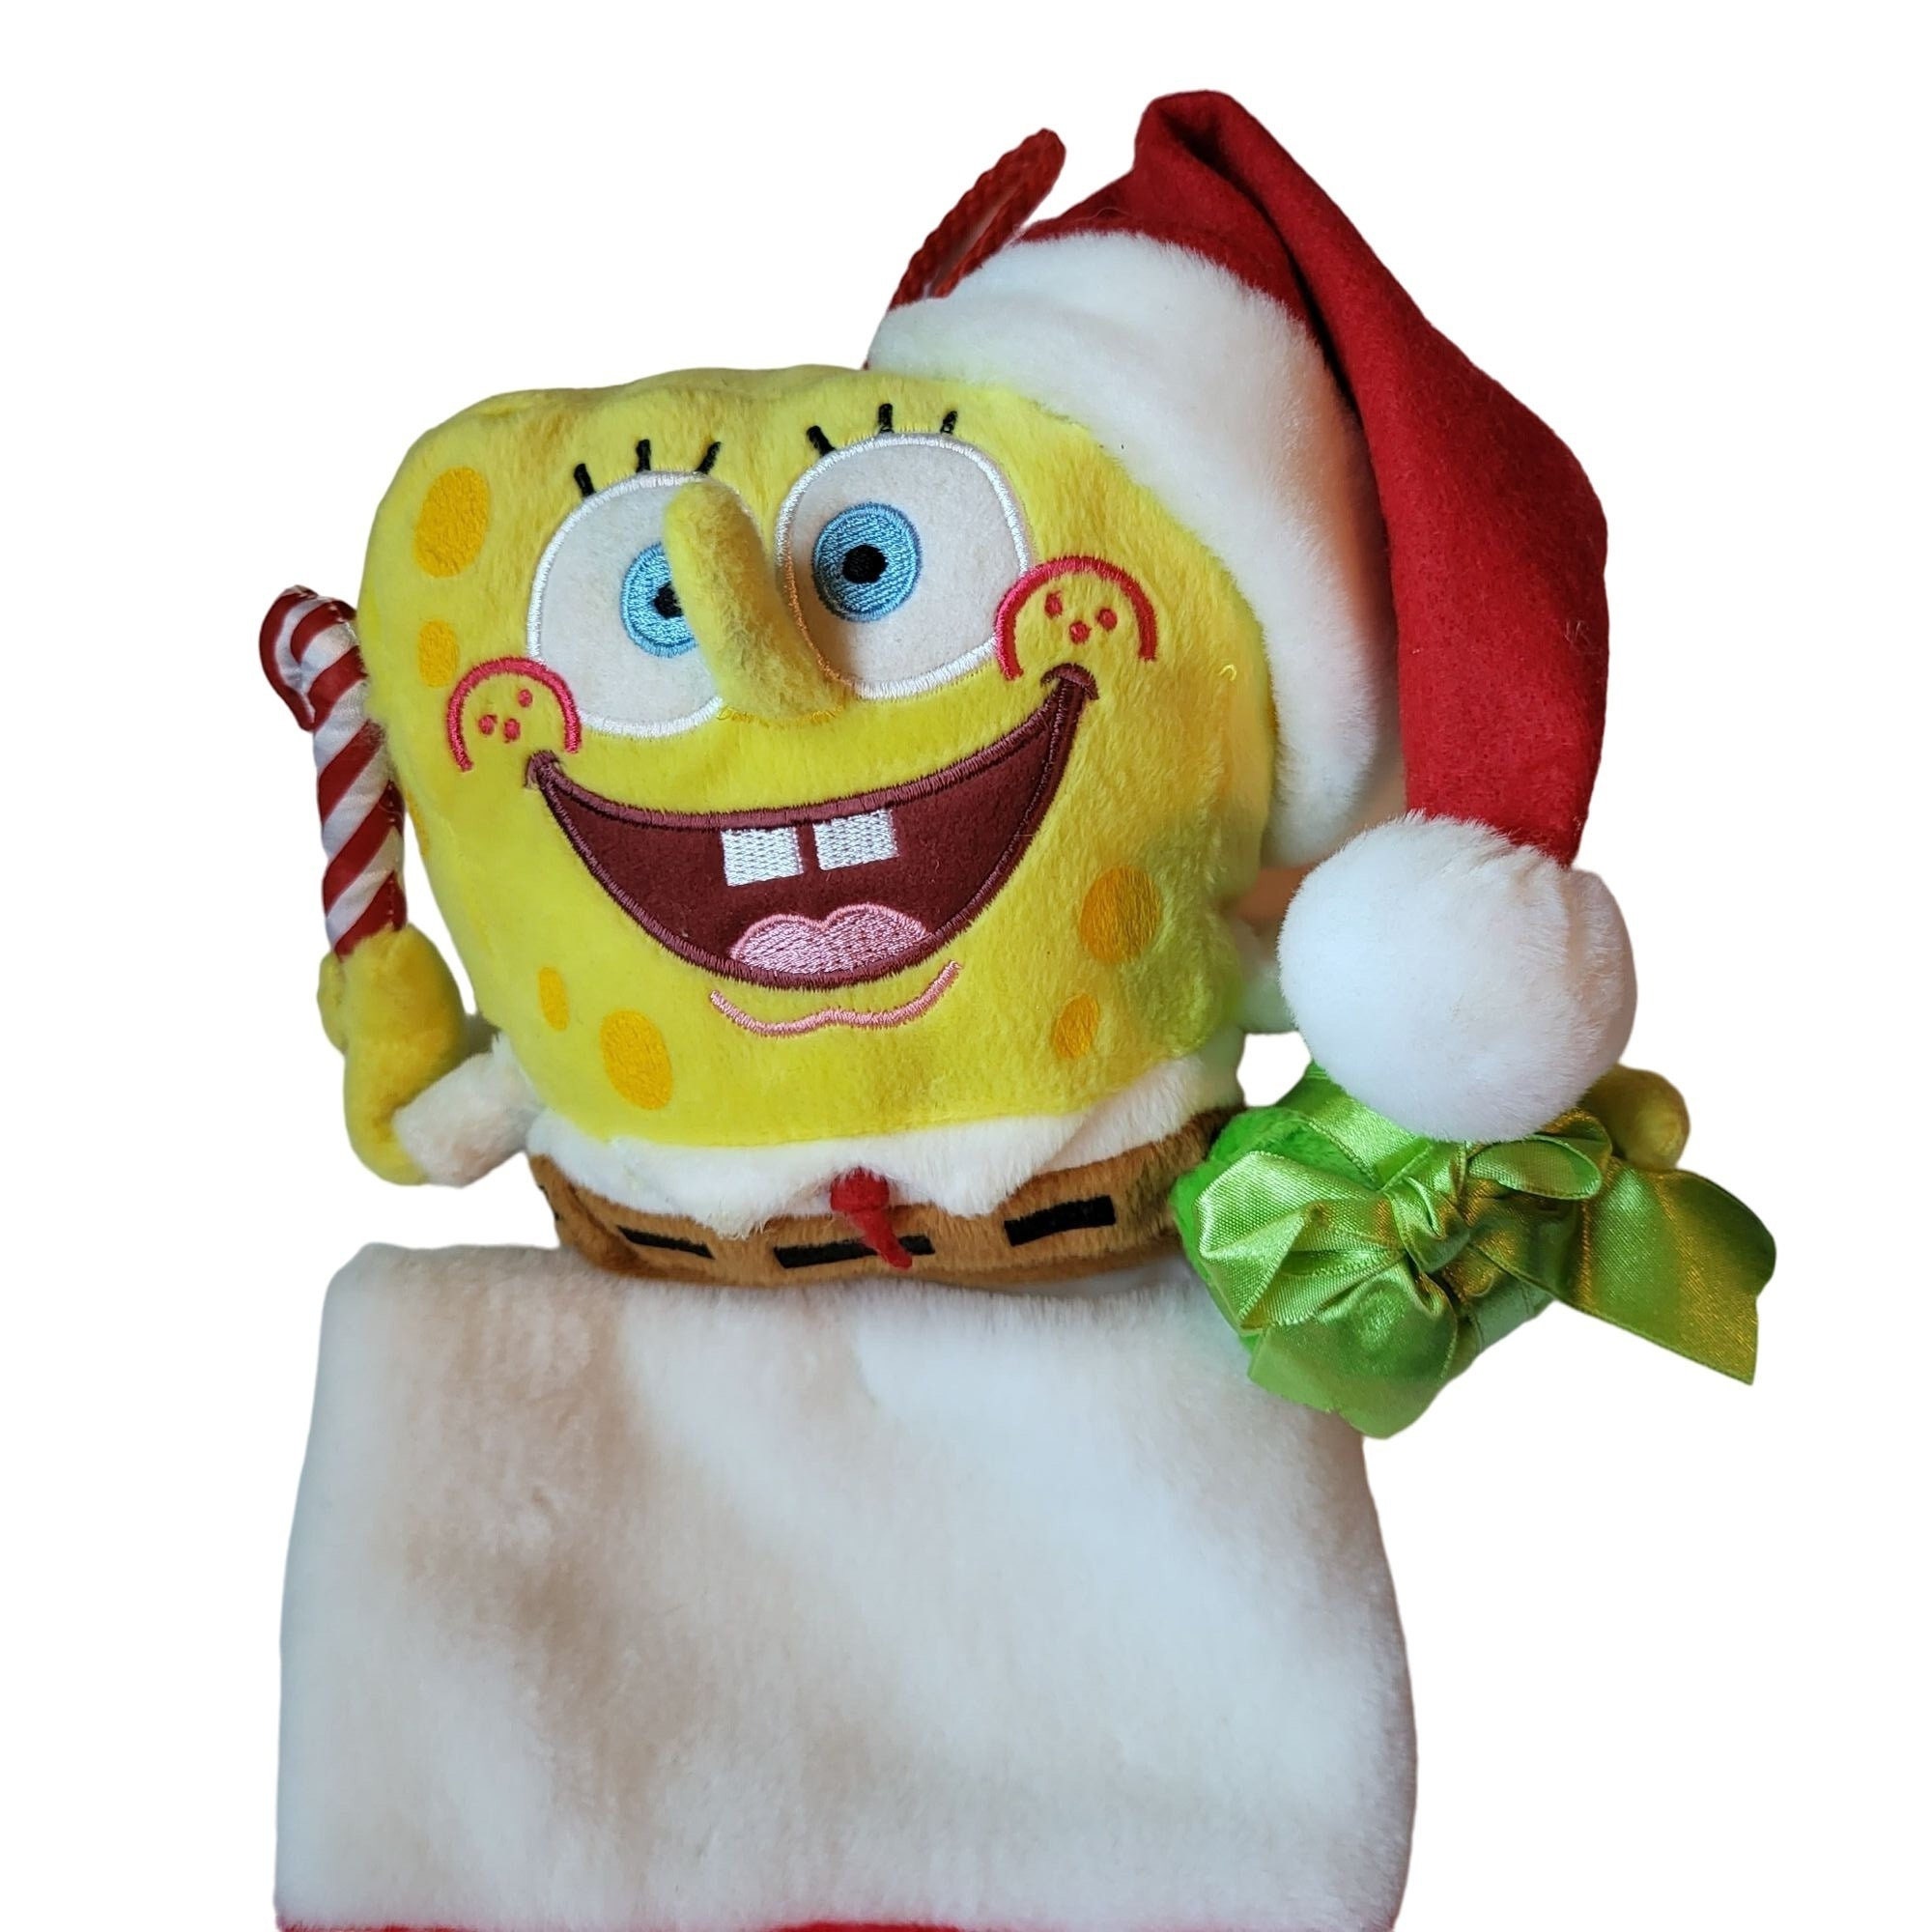 NWT 20” Spongebob Squarepants Christmas Stocking Viacom Kurt S. Adler  Holiday